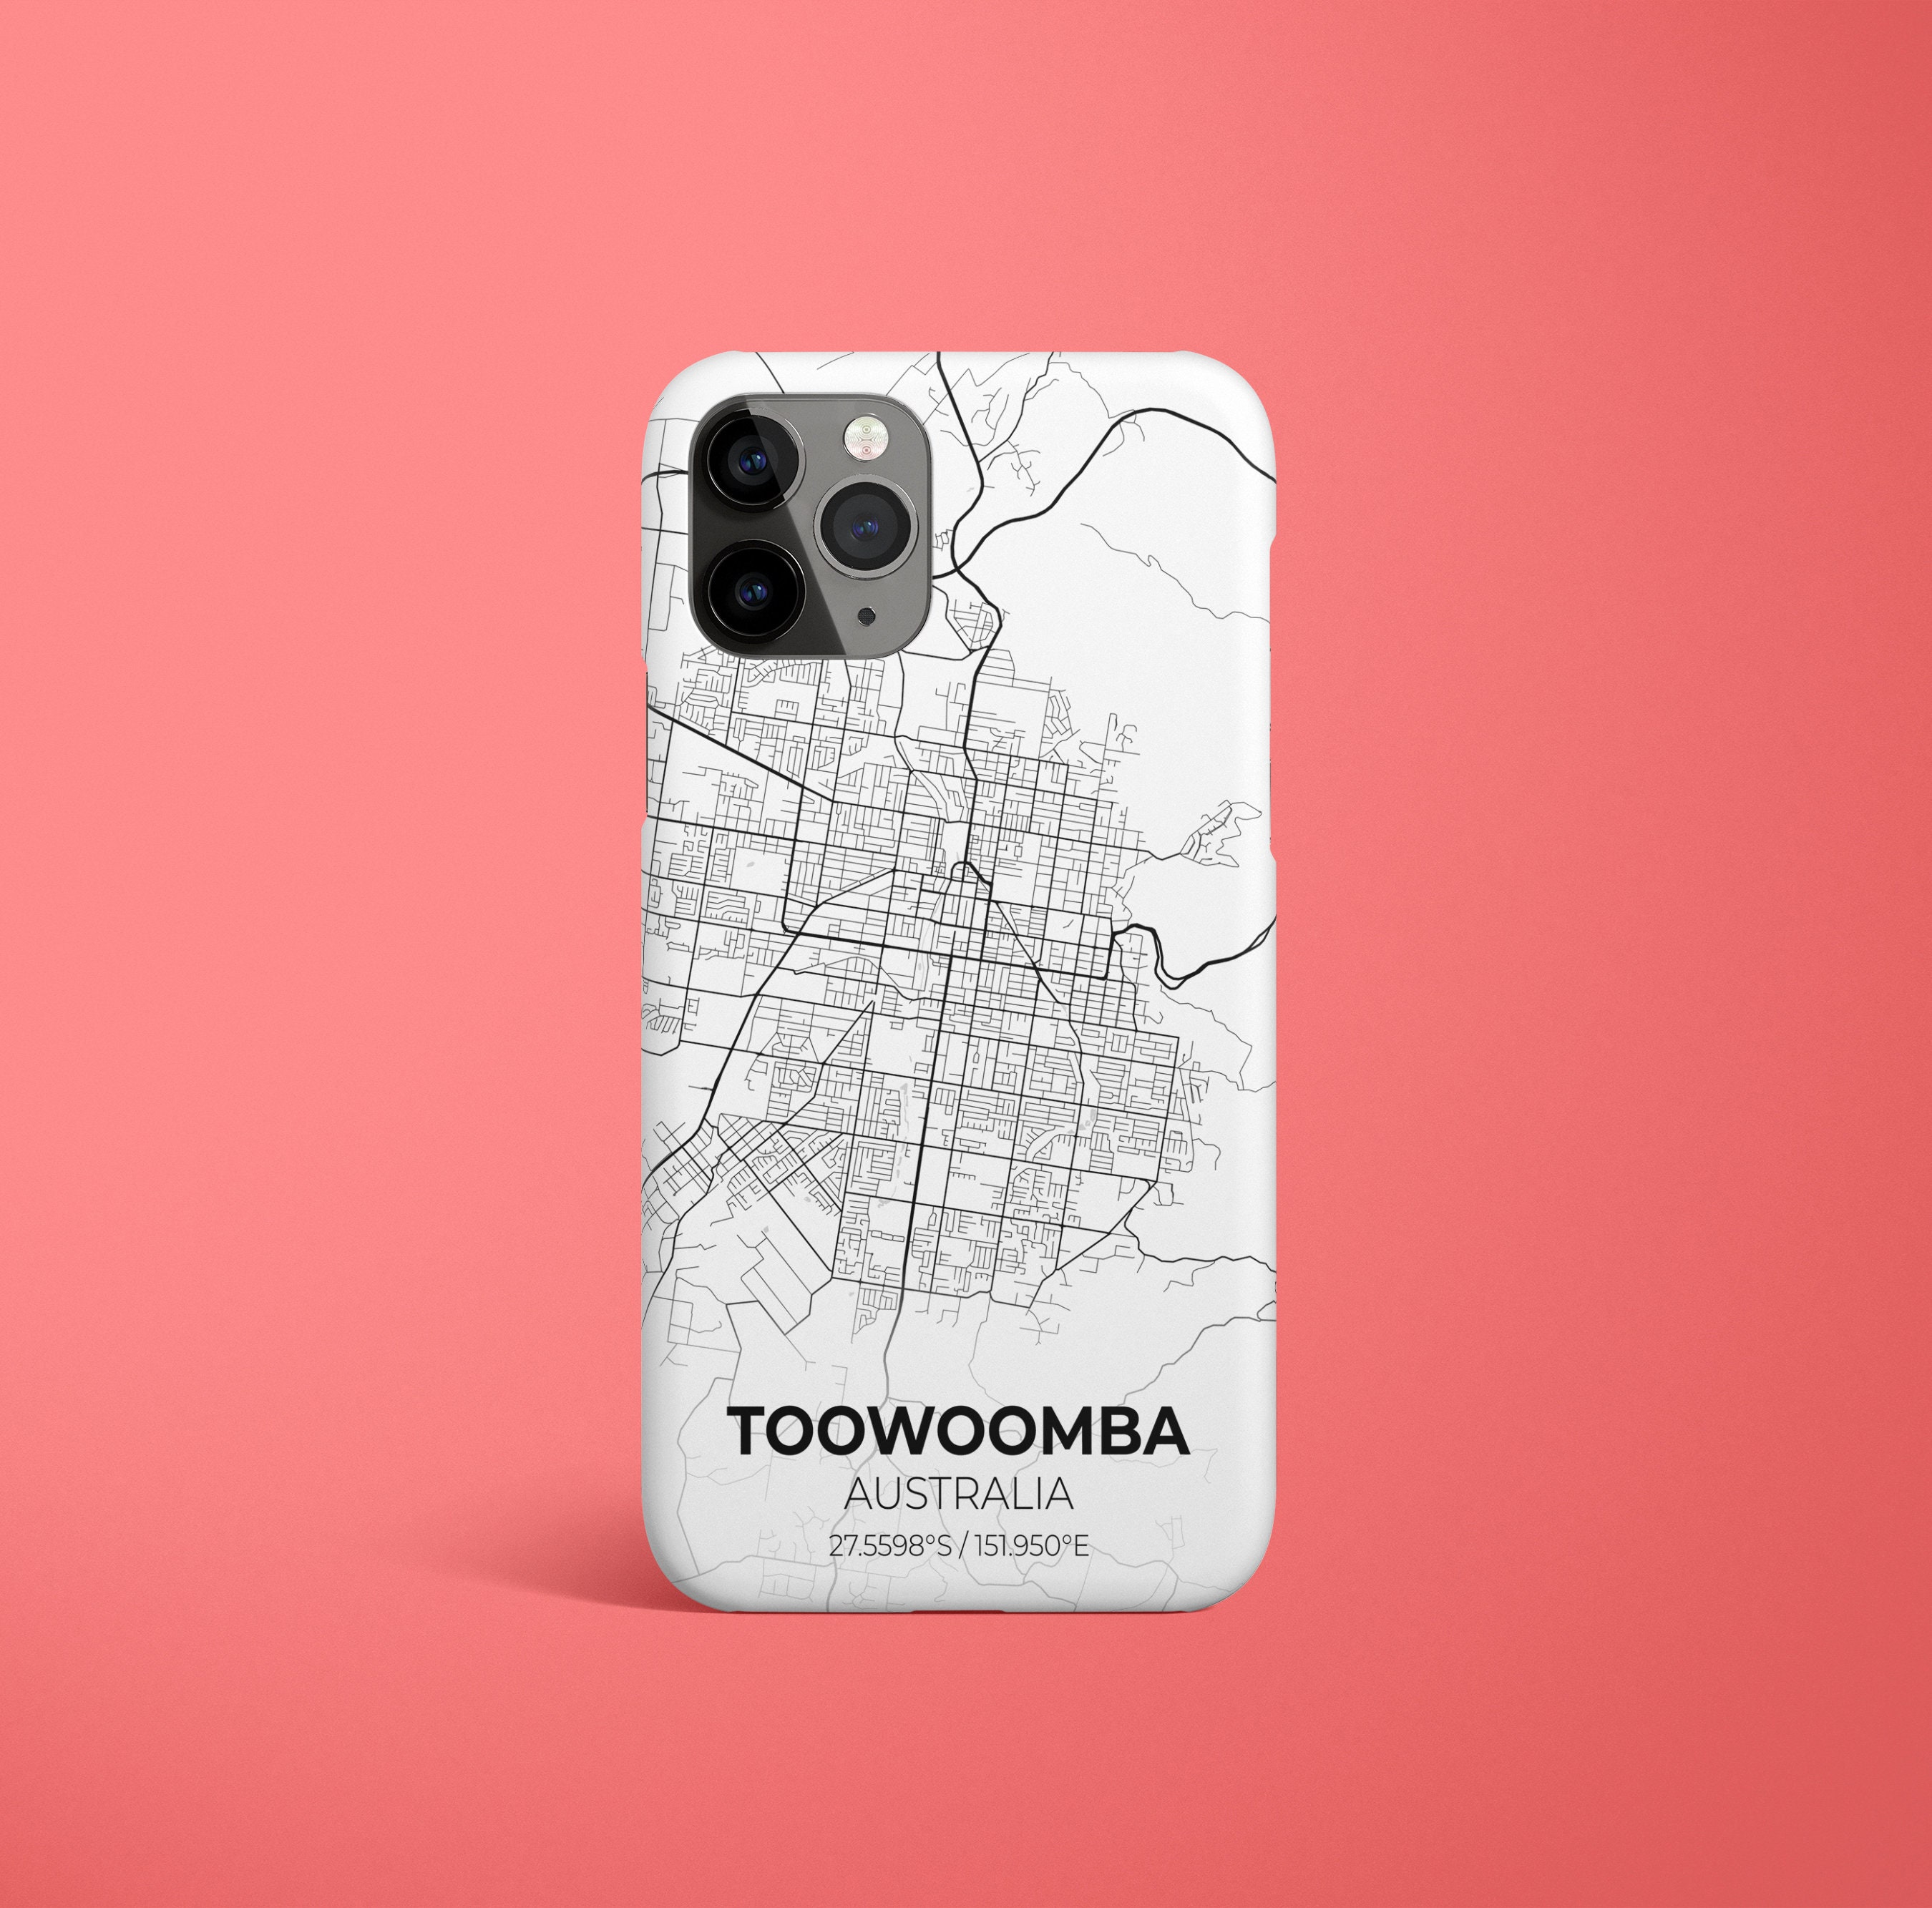 Toowoomba City Map iPhone Case iPhone 12 Case iPhone 12 Pro 